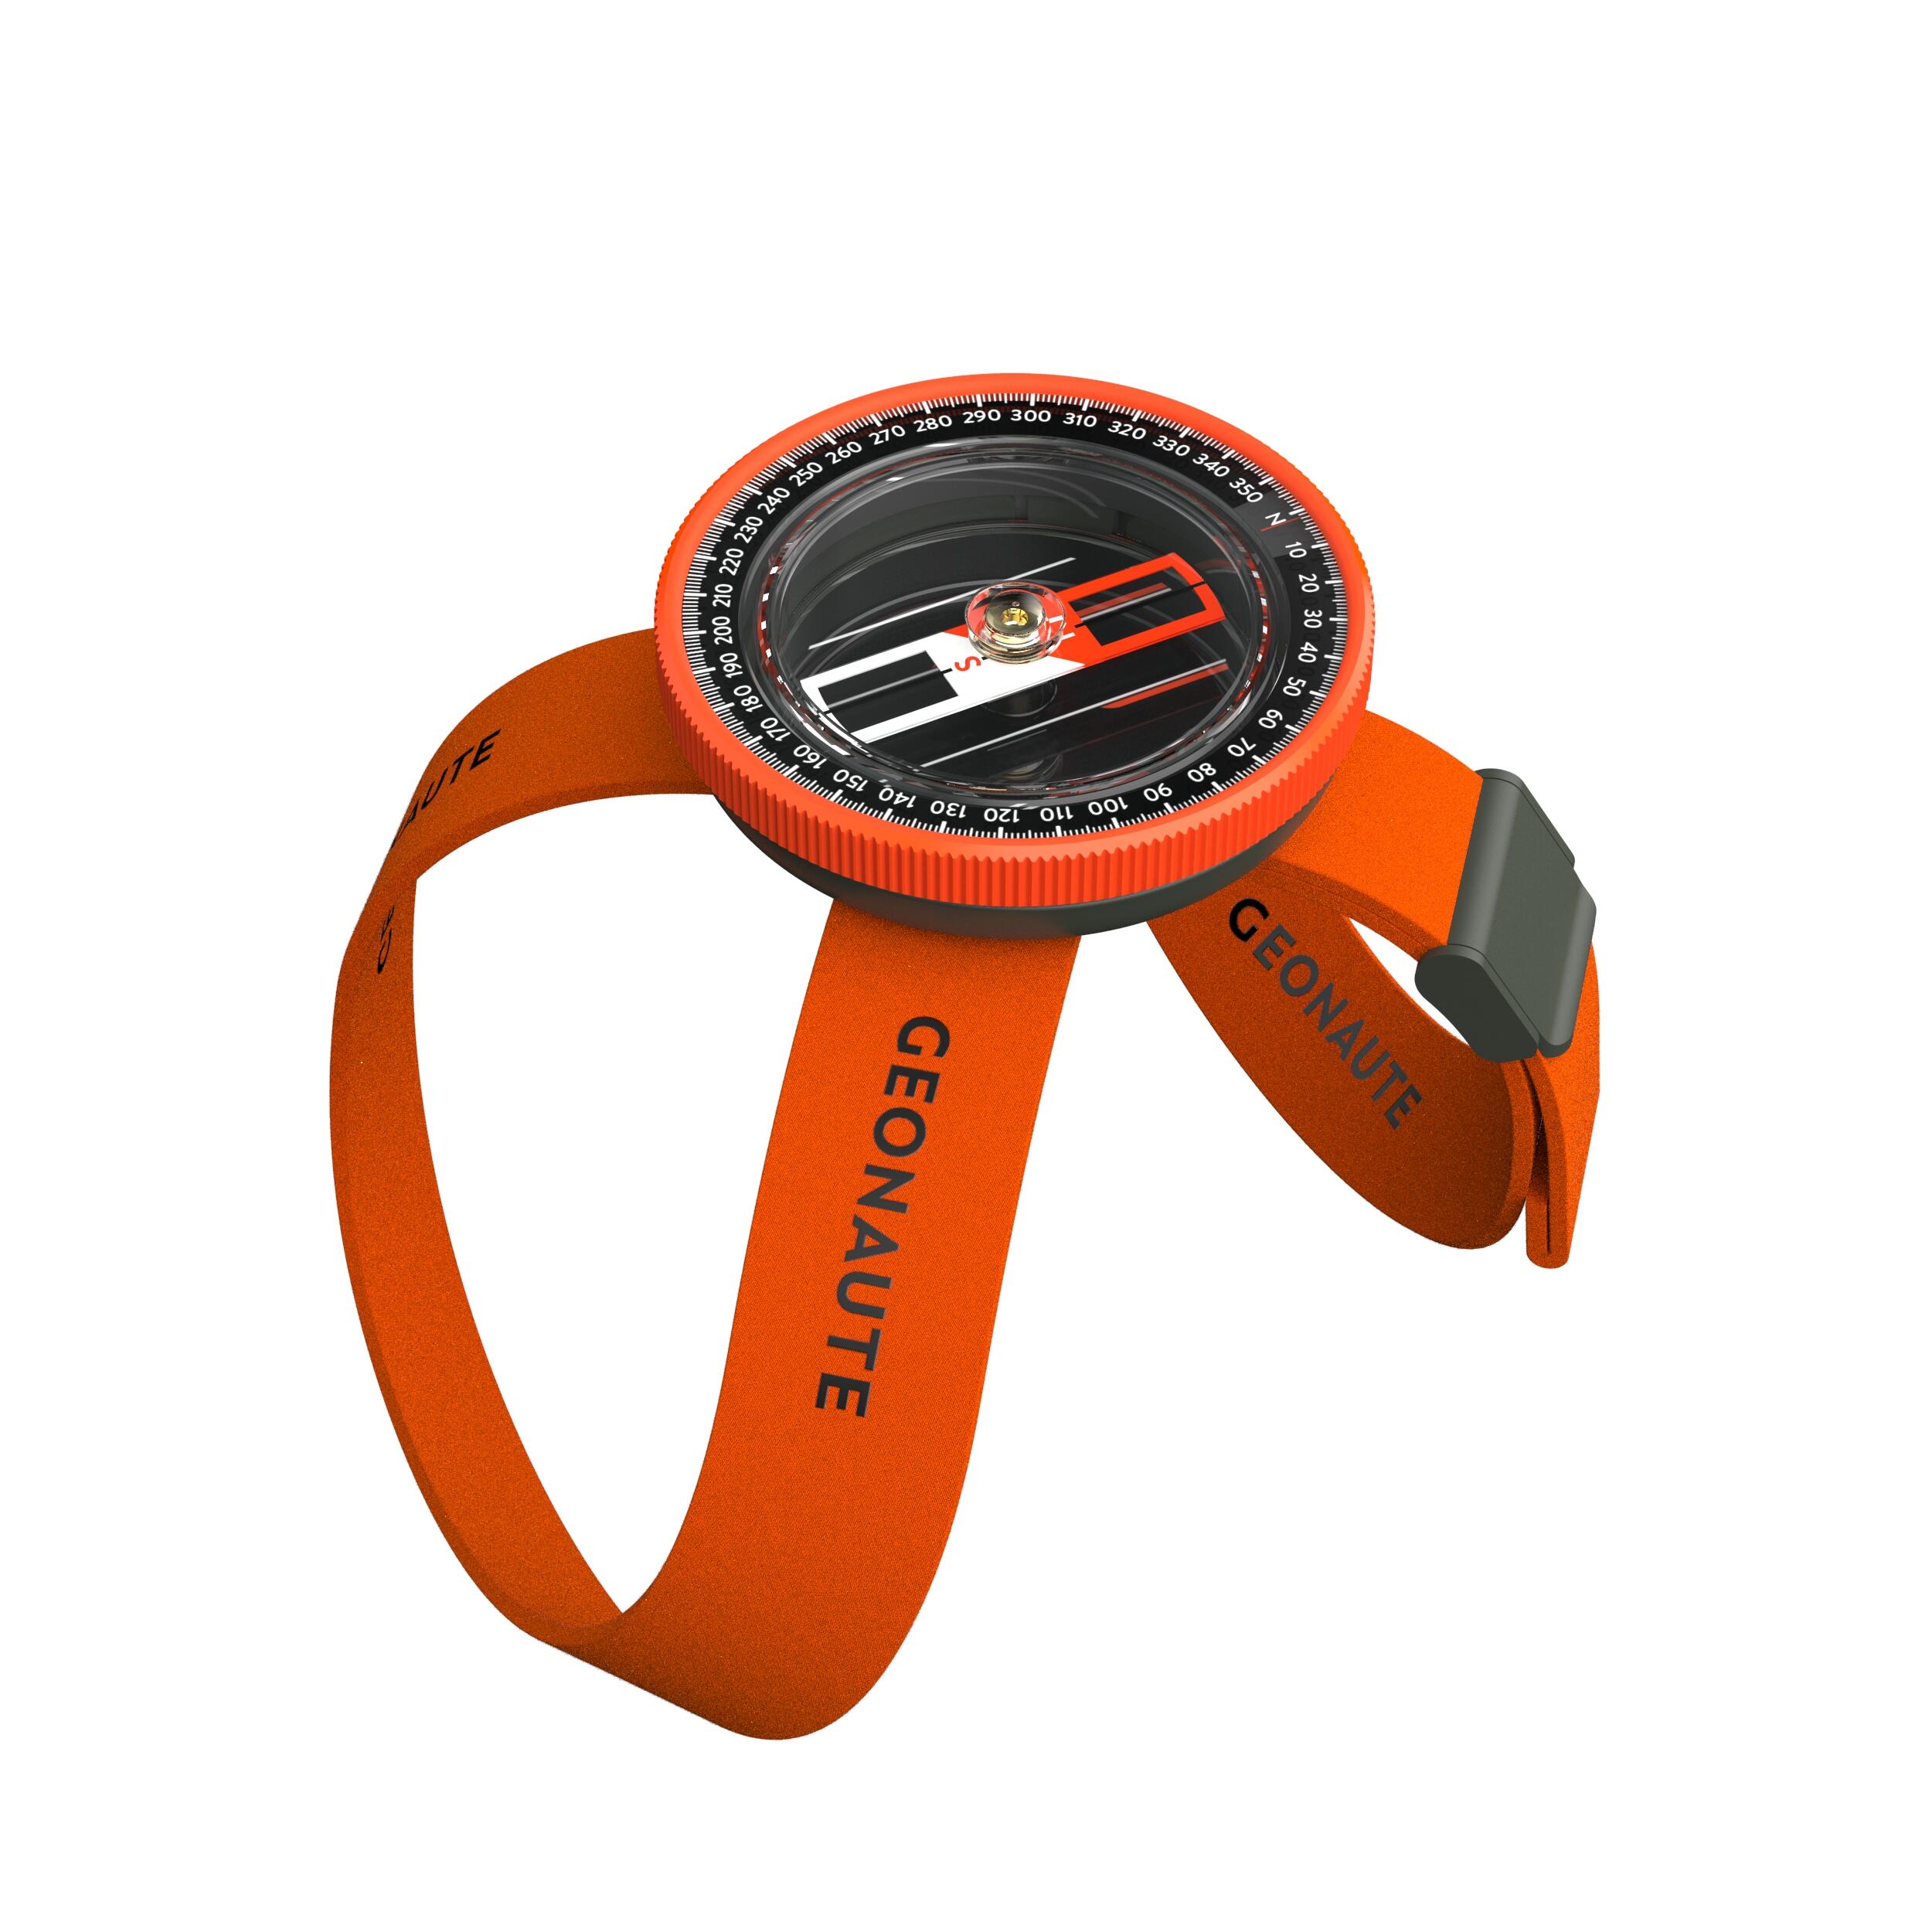 GEONAUTE QUICK and STABLE WRIST compass for MULTISPORT adventure racing - orange black